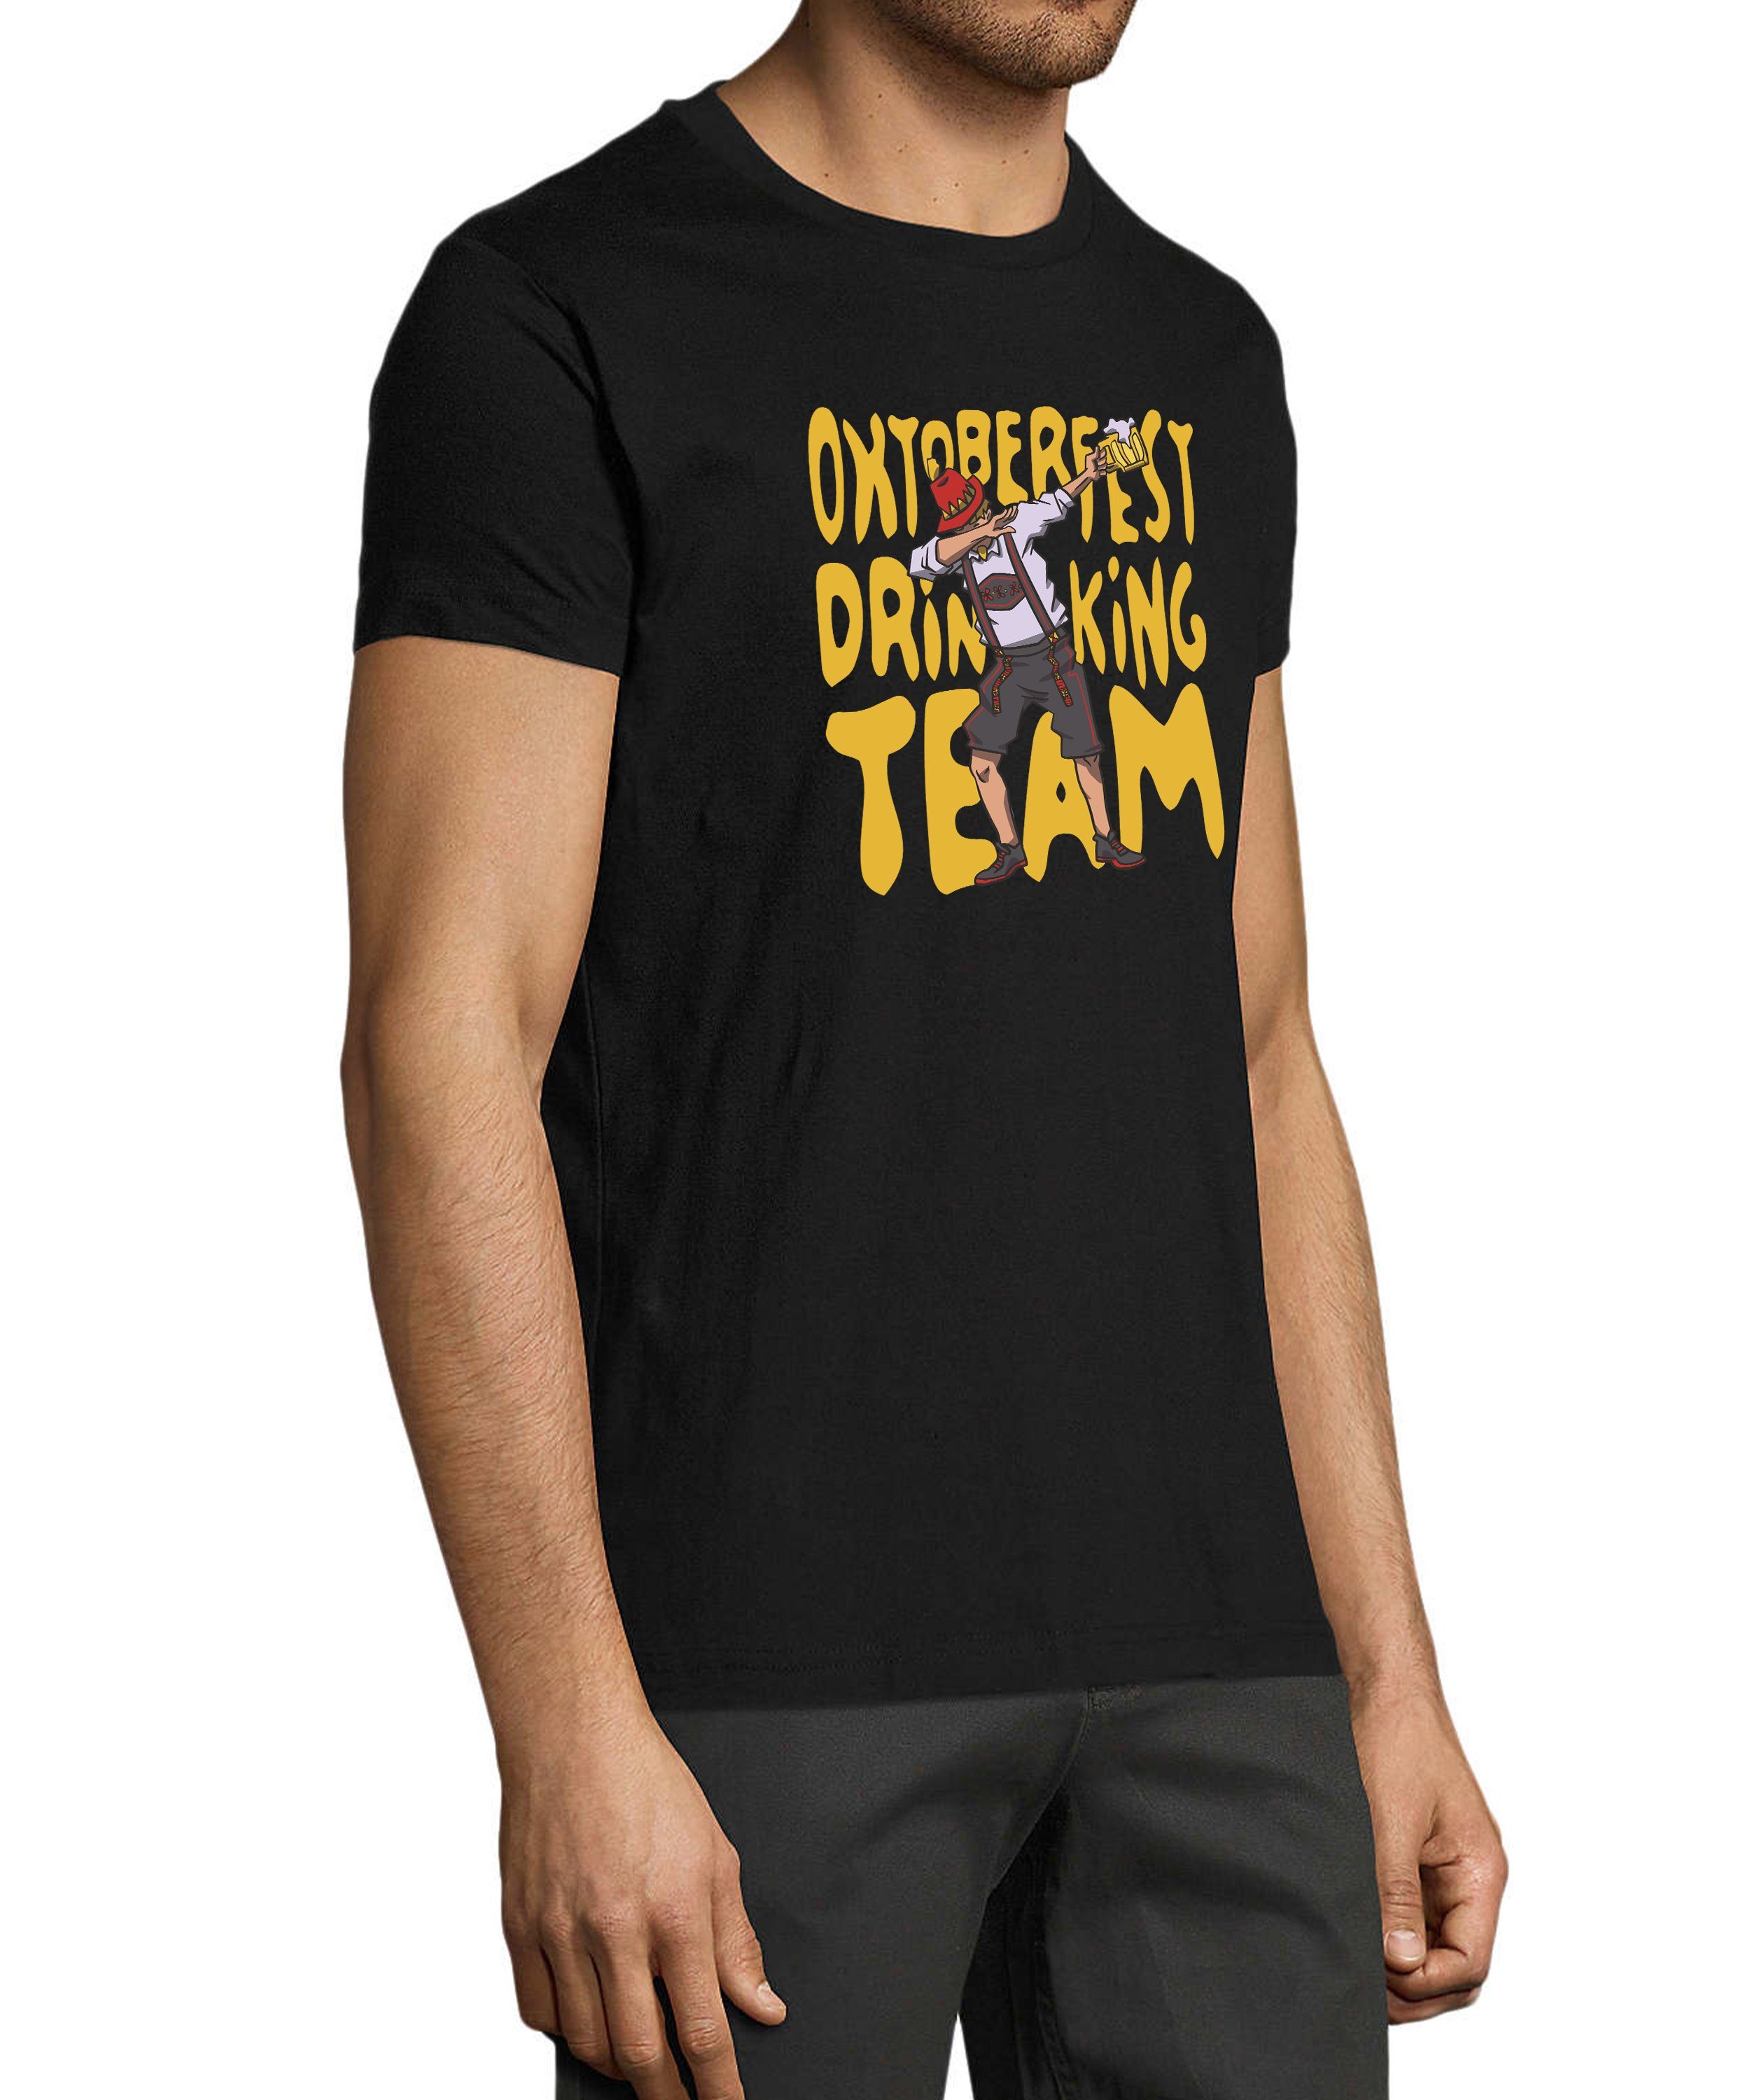 Oktoberfest Shirt MyDesign24 Regular i305 Fun Aufdruck T-Shirt T-Shirt - Baumwollshirt Herren Drinking mit Print schwarz Team Fit,